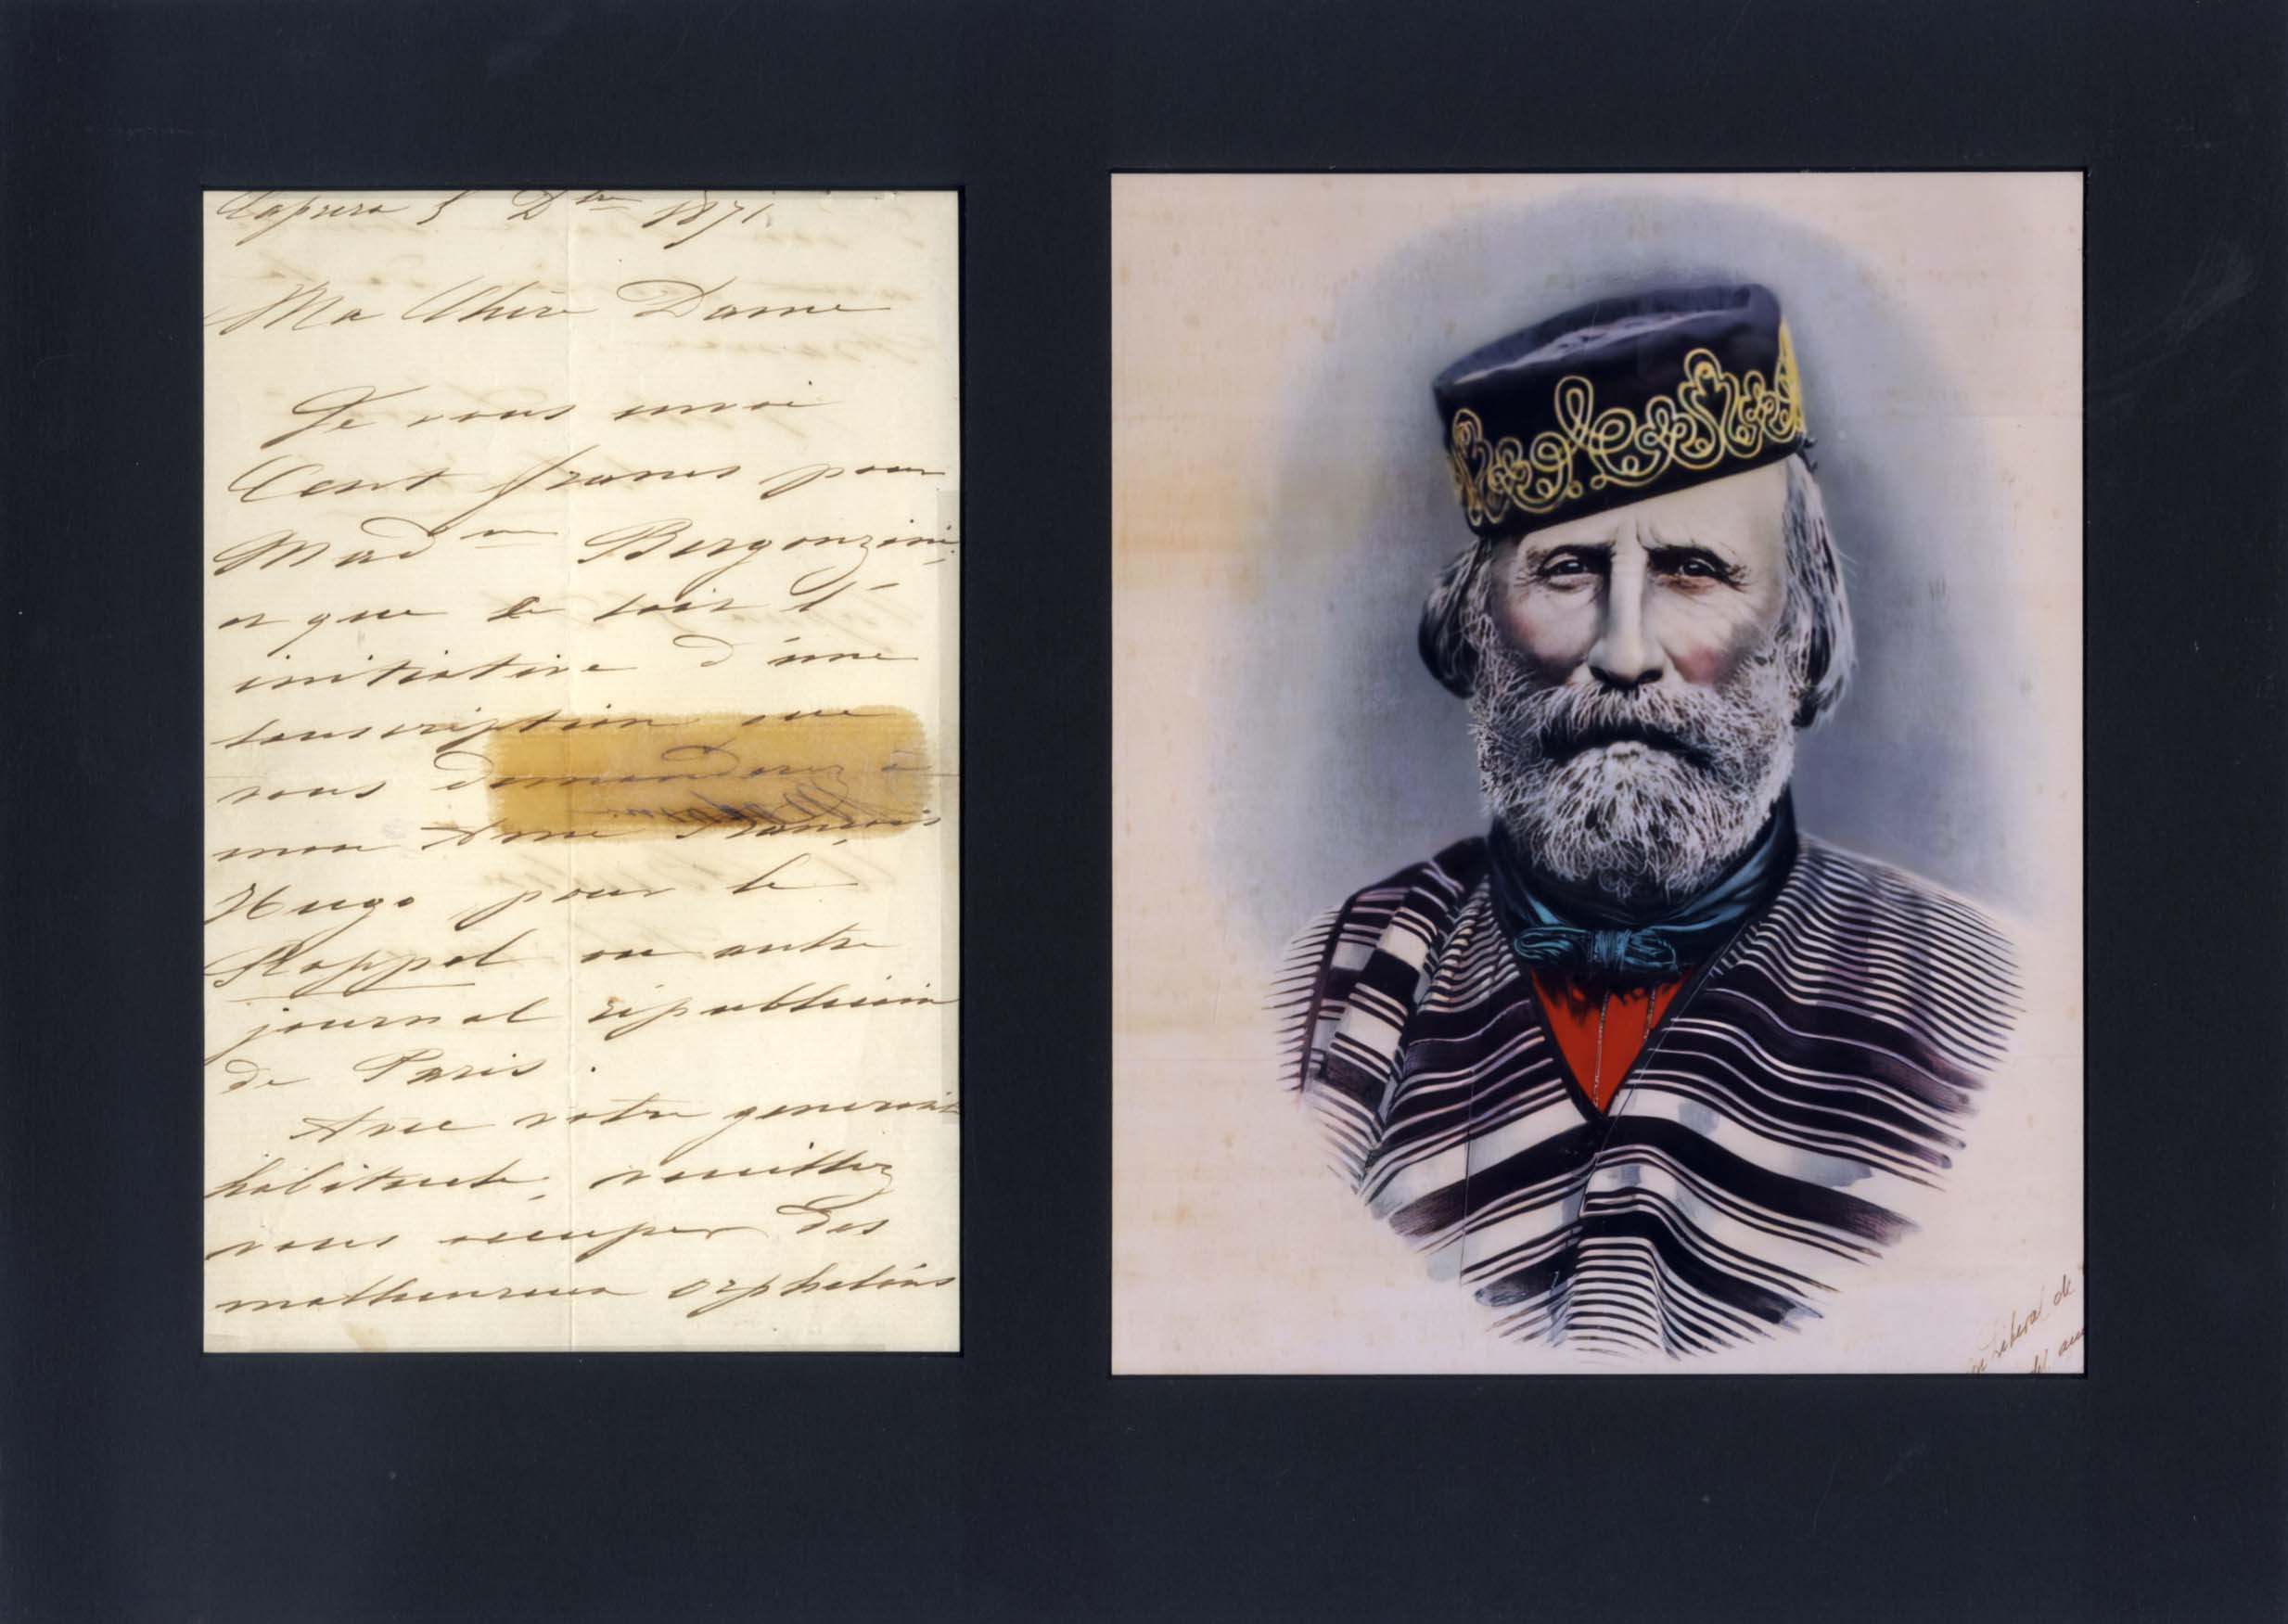 Giuseppe Garibaldi Autograph Autogramm | ID 8252154904725